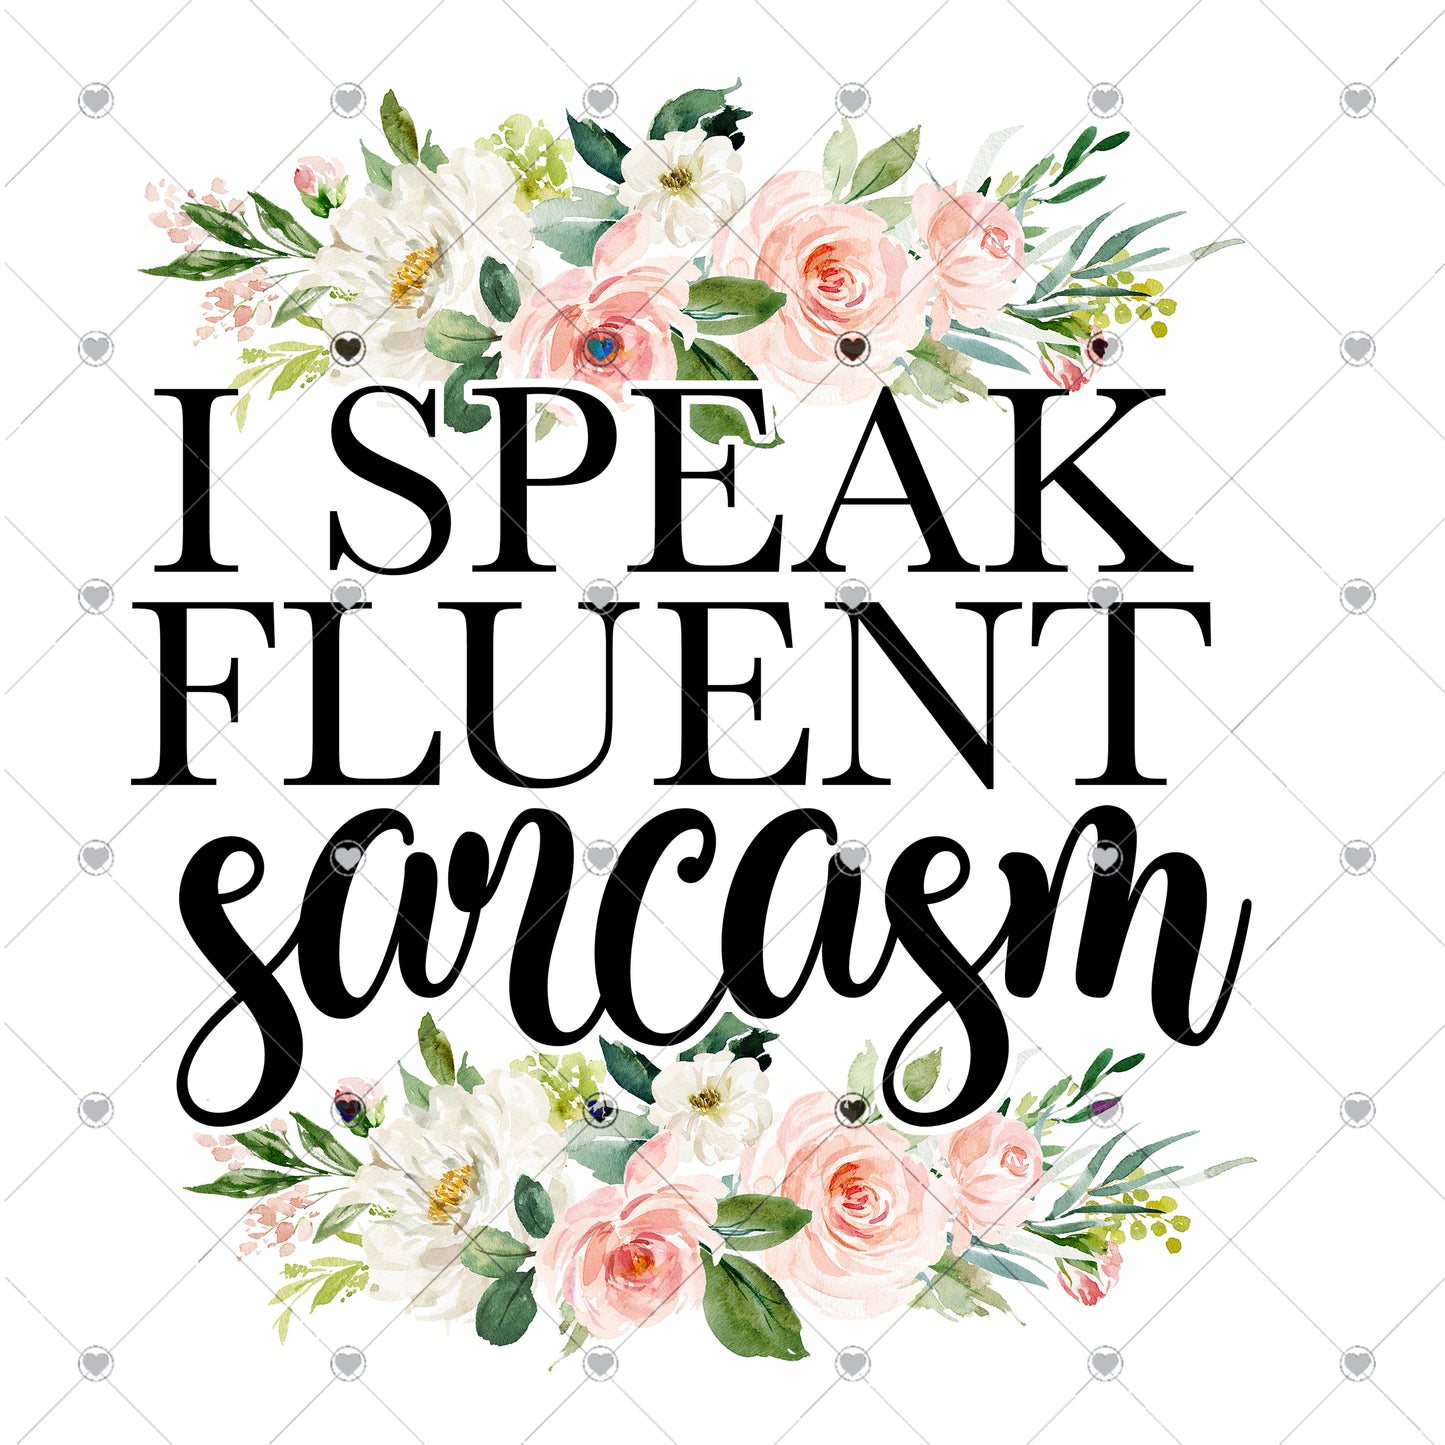 I Speak Fluent Sarcasm Ready To Press Sublimation Transfer